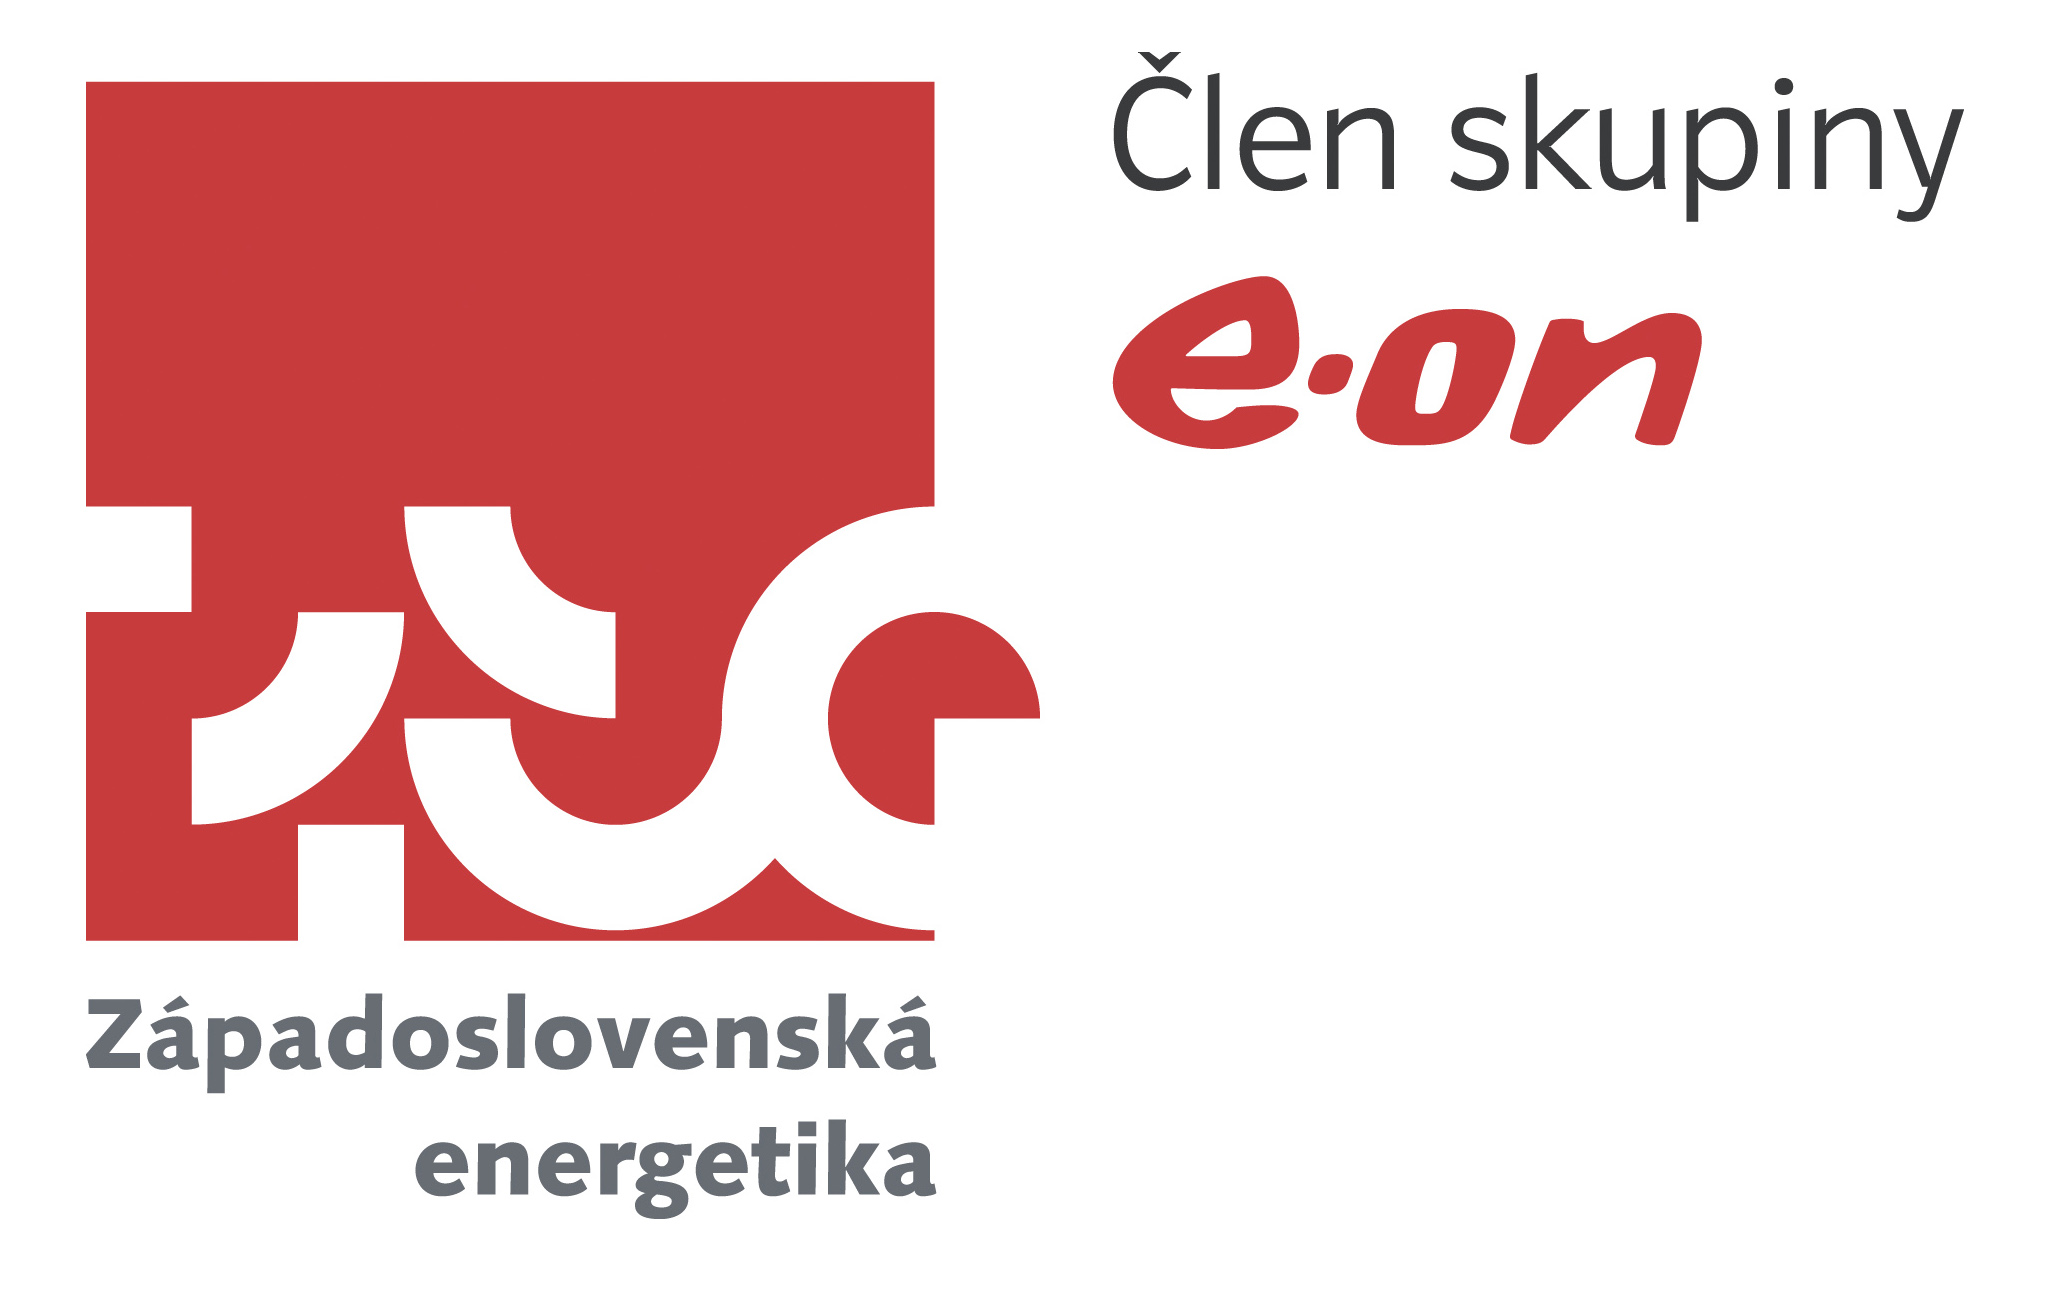 medium-hrady-logo-eon